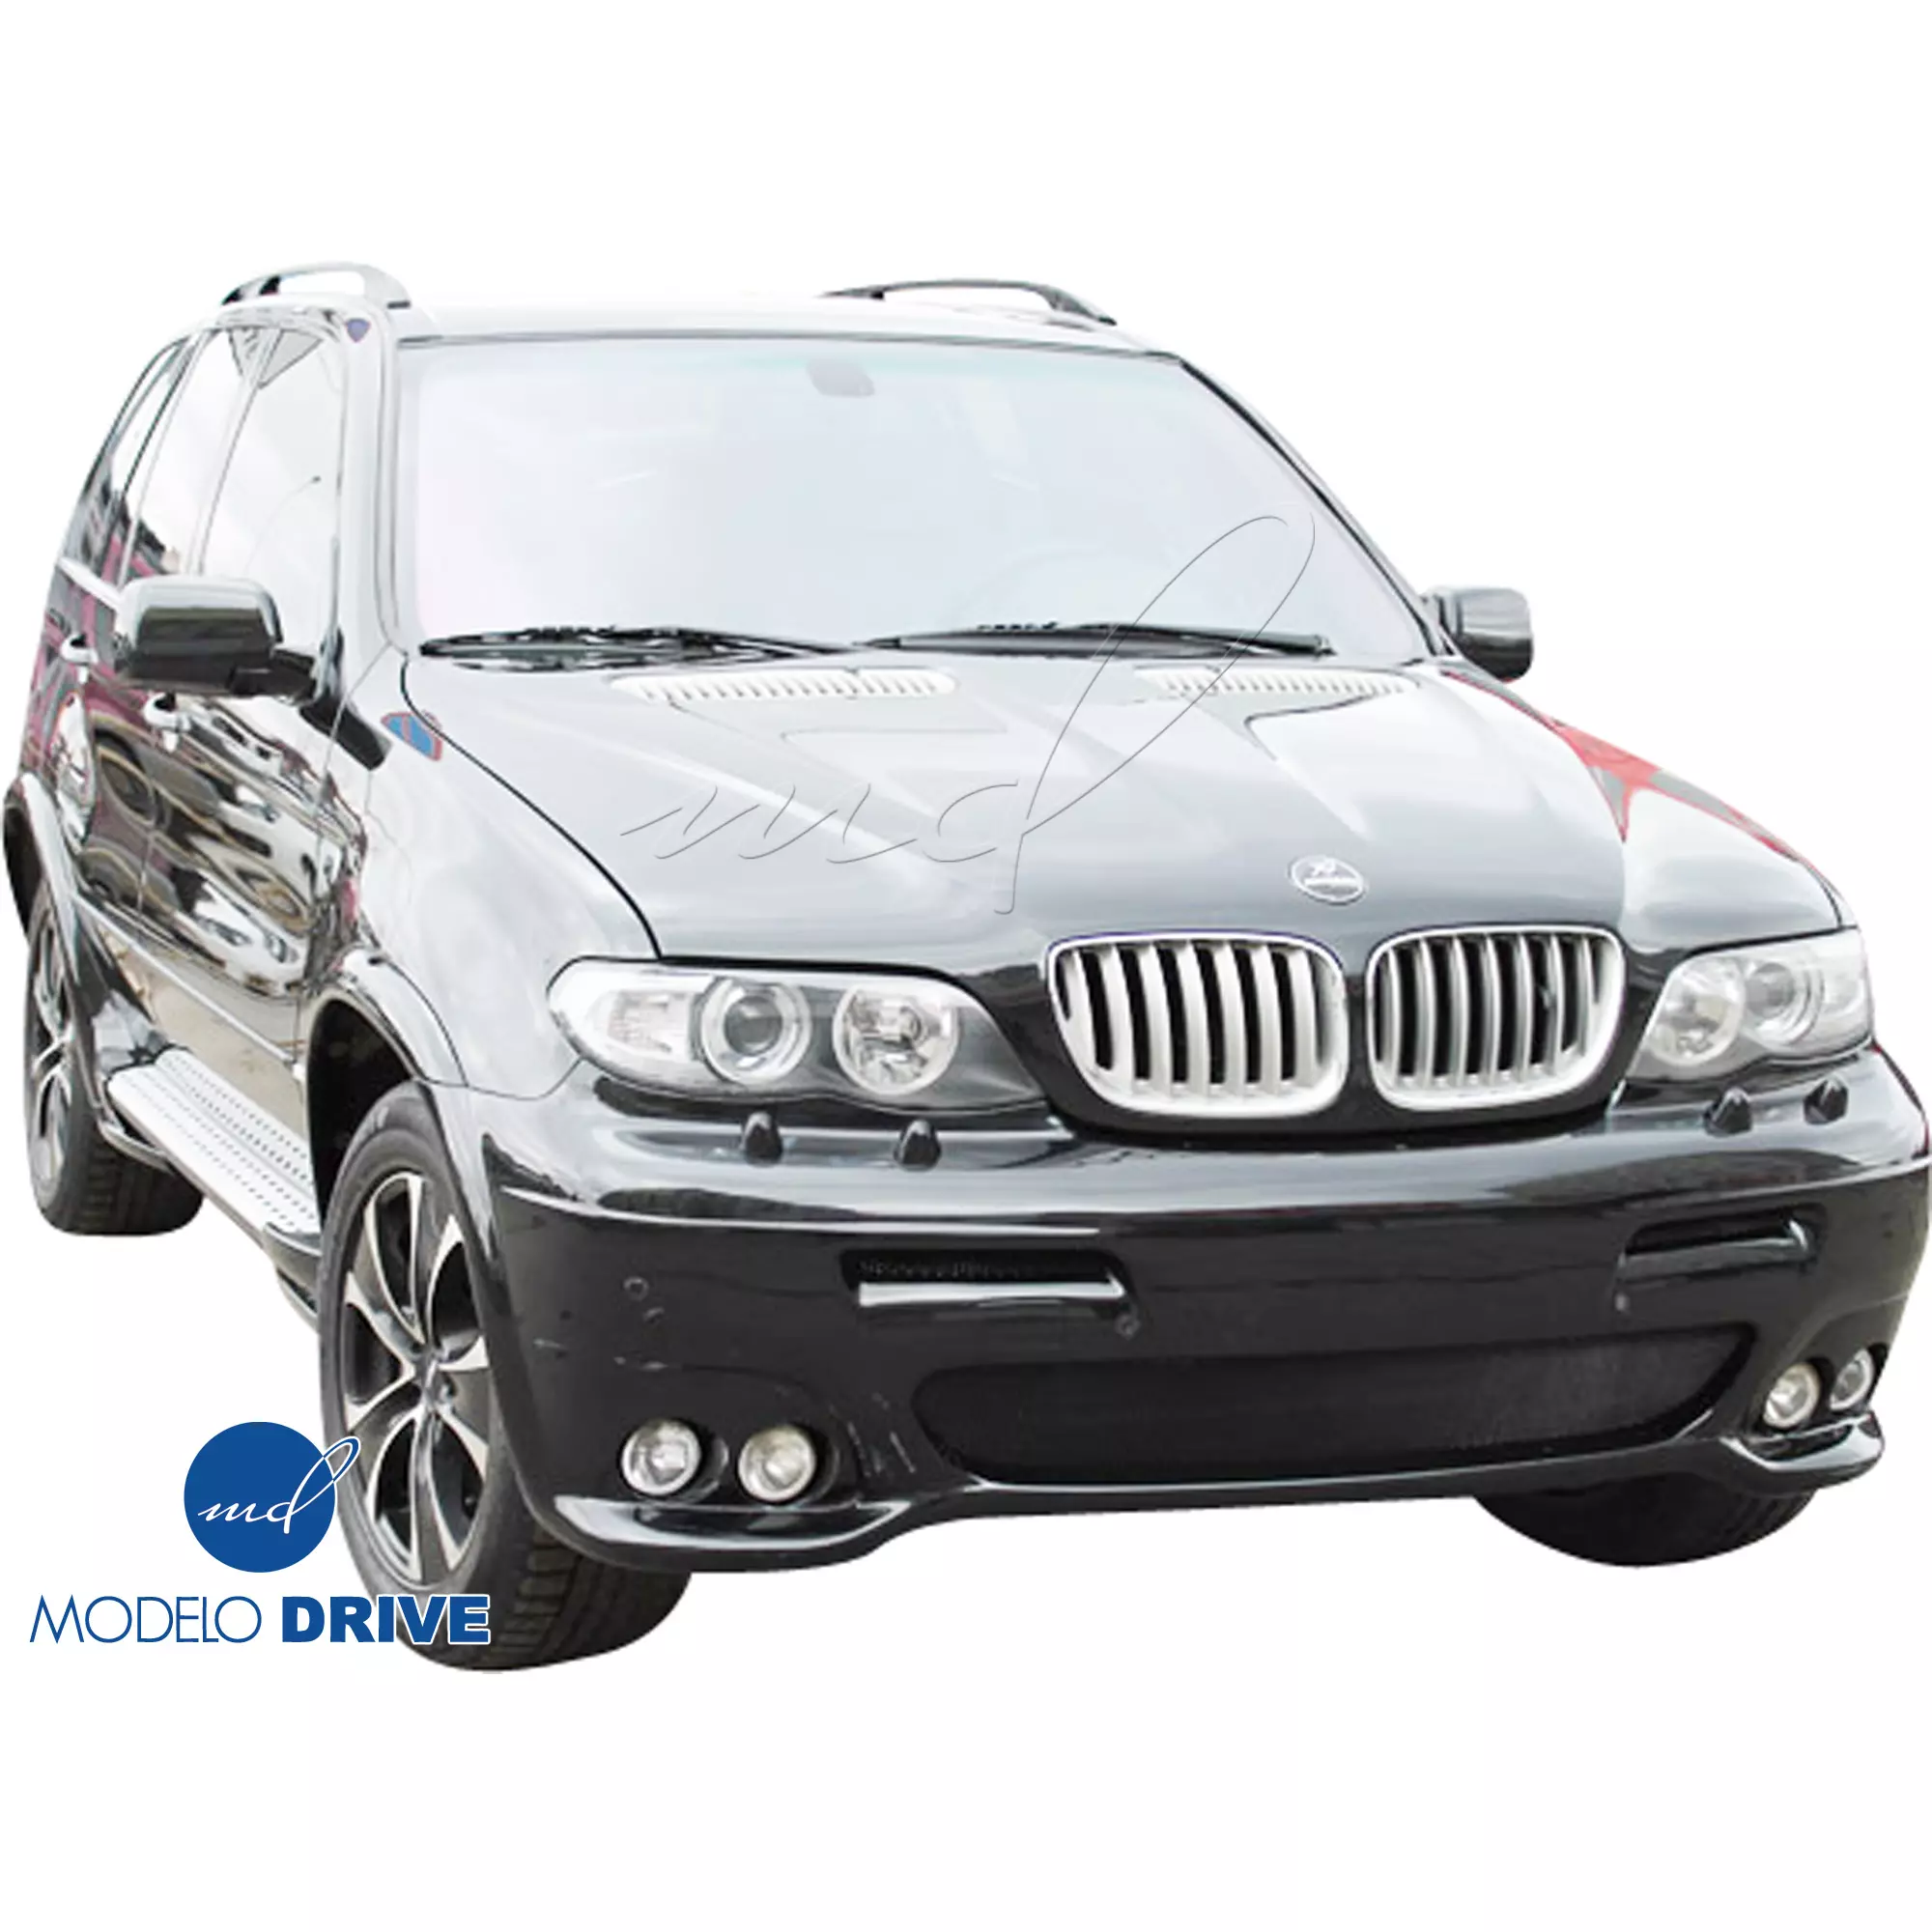 ModeloDrive FRP HAMA Body Kit 3pc > BMW X5 E53 2000-2006 > 5dr - Image 9